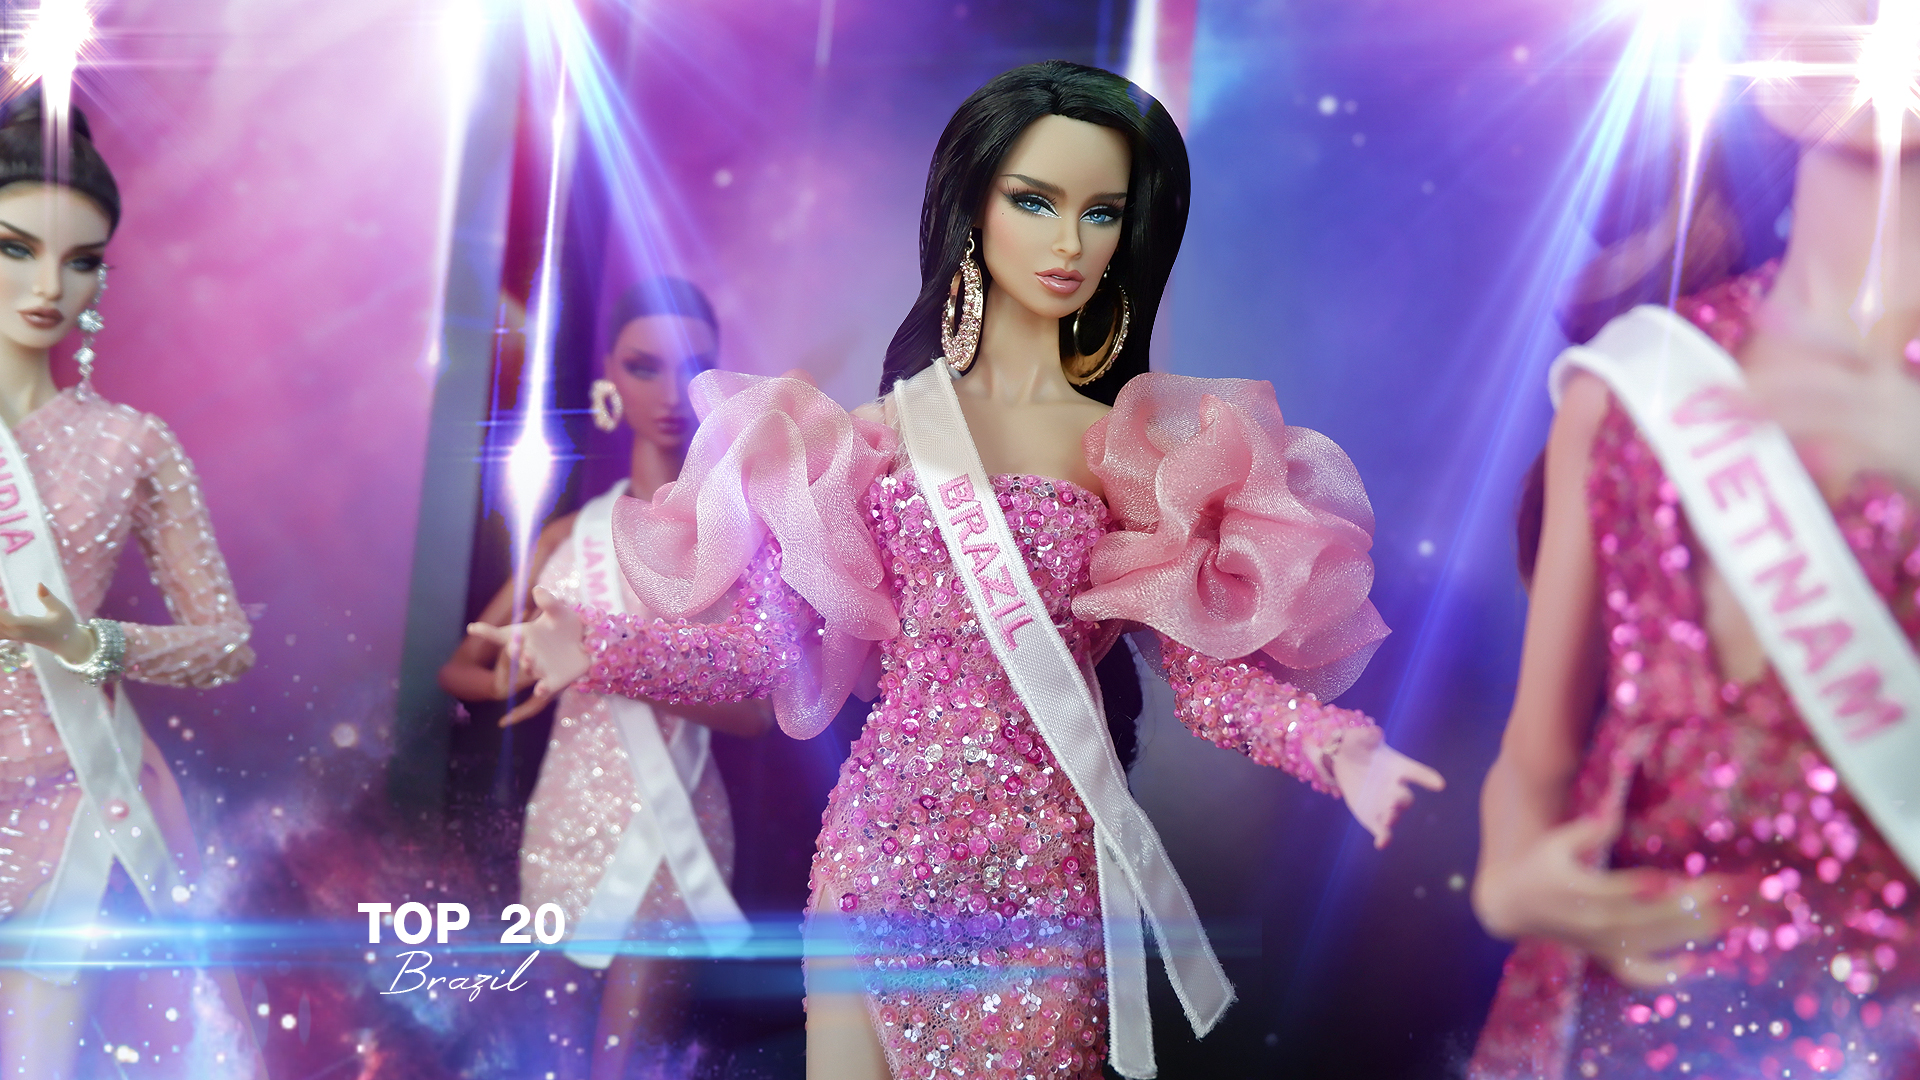 Miss Diva Doll 2020 final coronation - Top Announcement Diva Doll